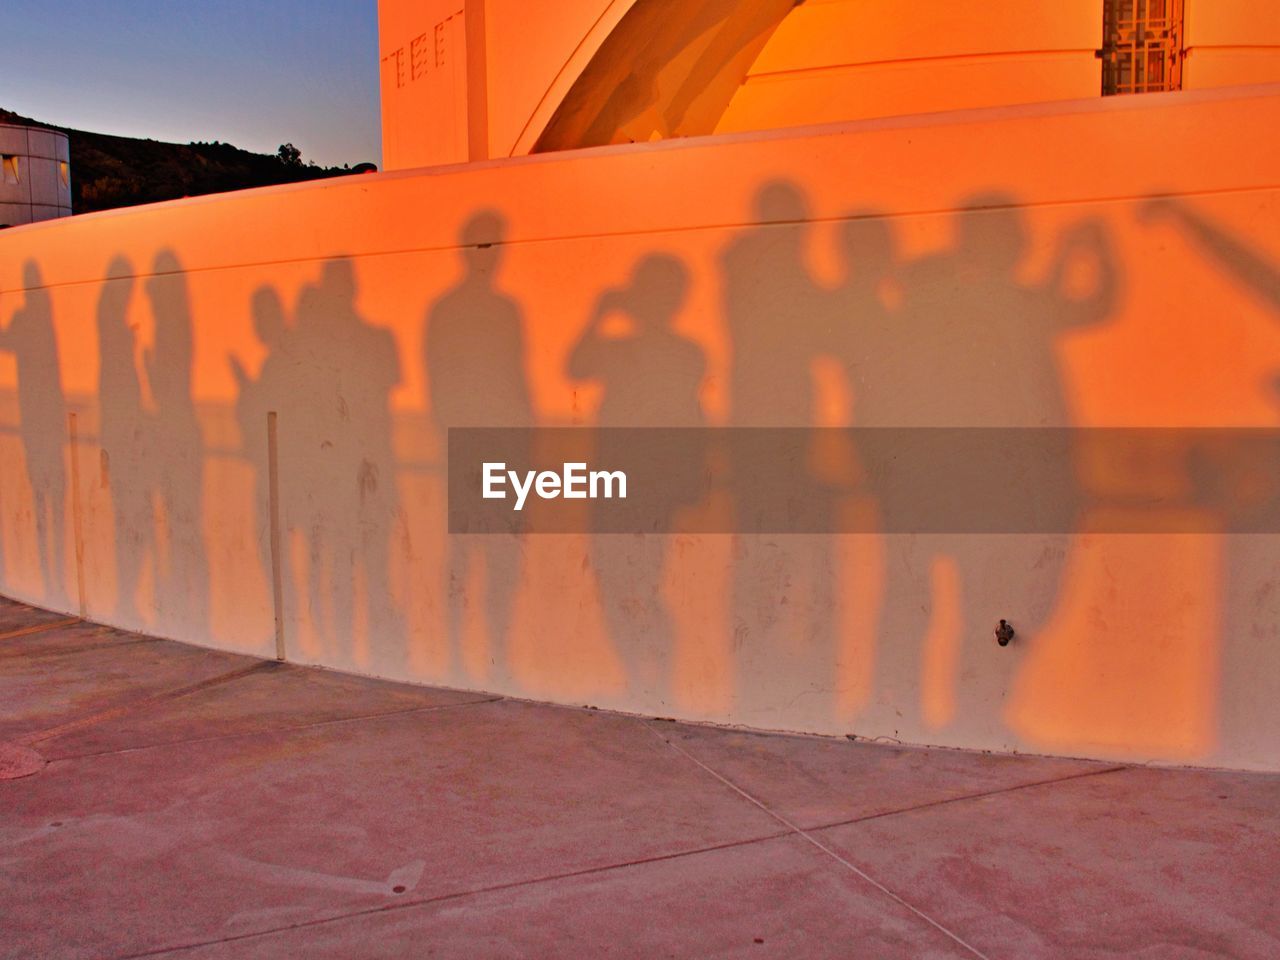 Shadow of people on orange wall